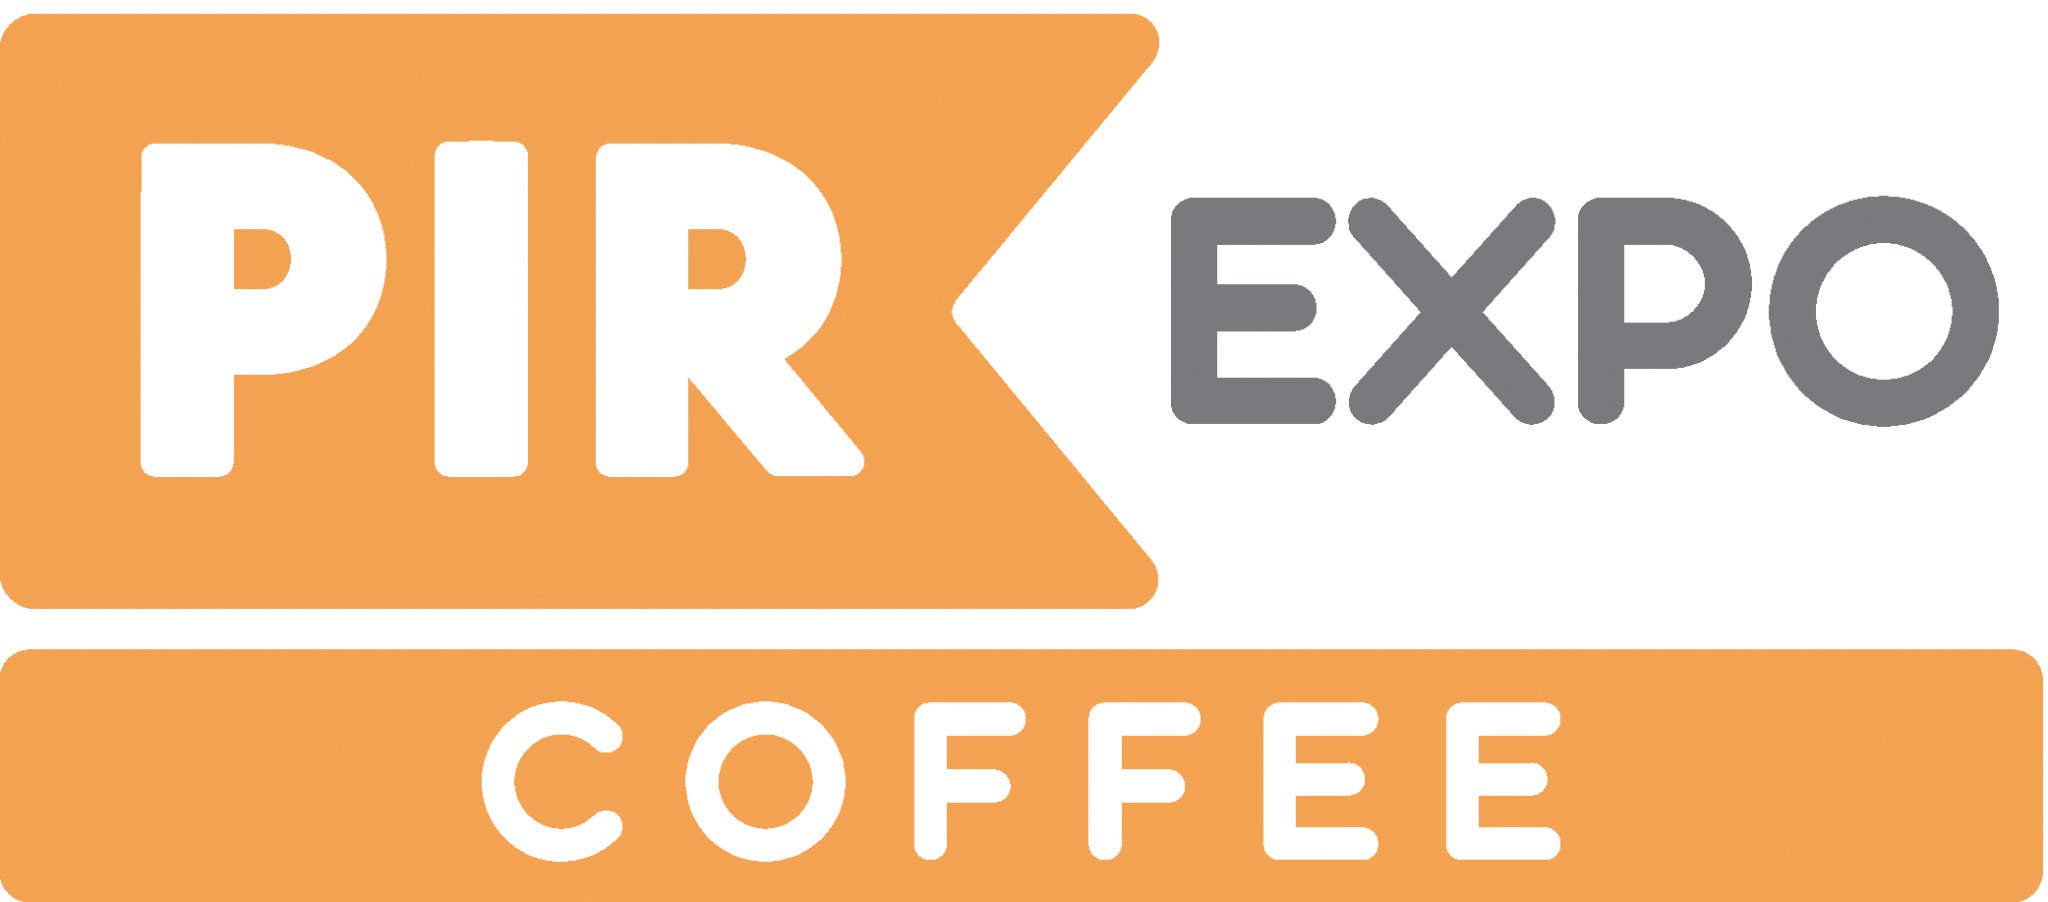 Pir. Пир Экспо логотип. PIR Expo кофе. PIR Coffee логотип. PIR Expo Coffee 2021.